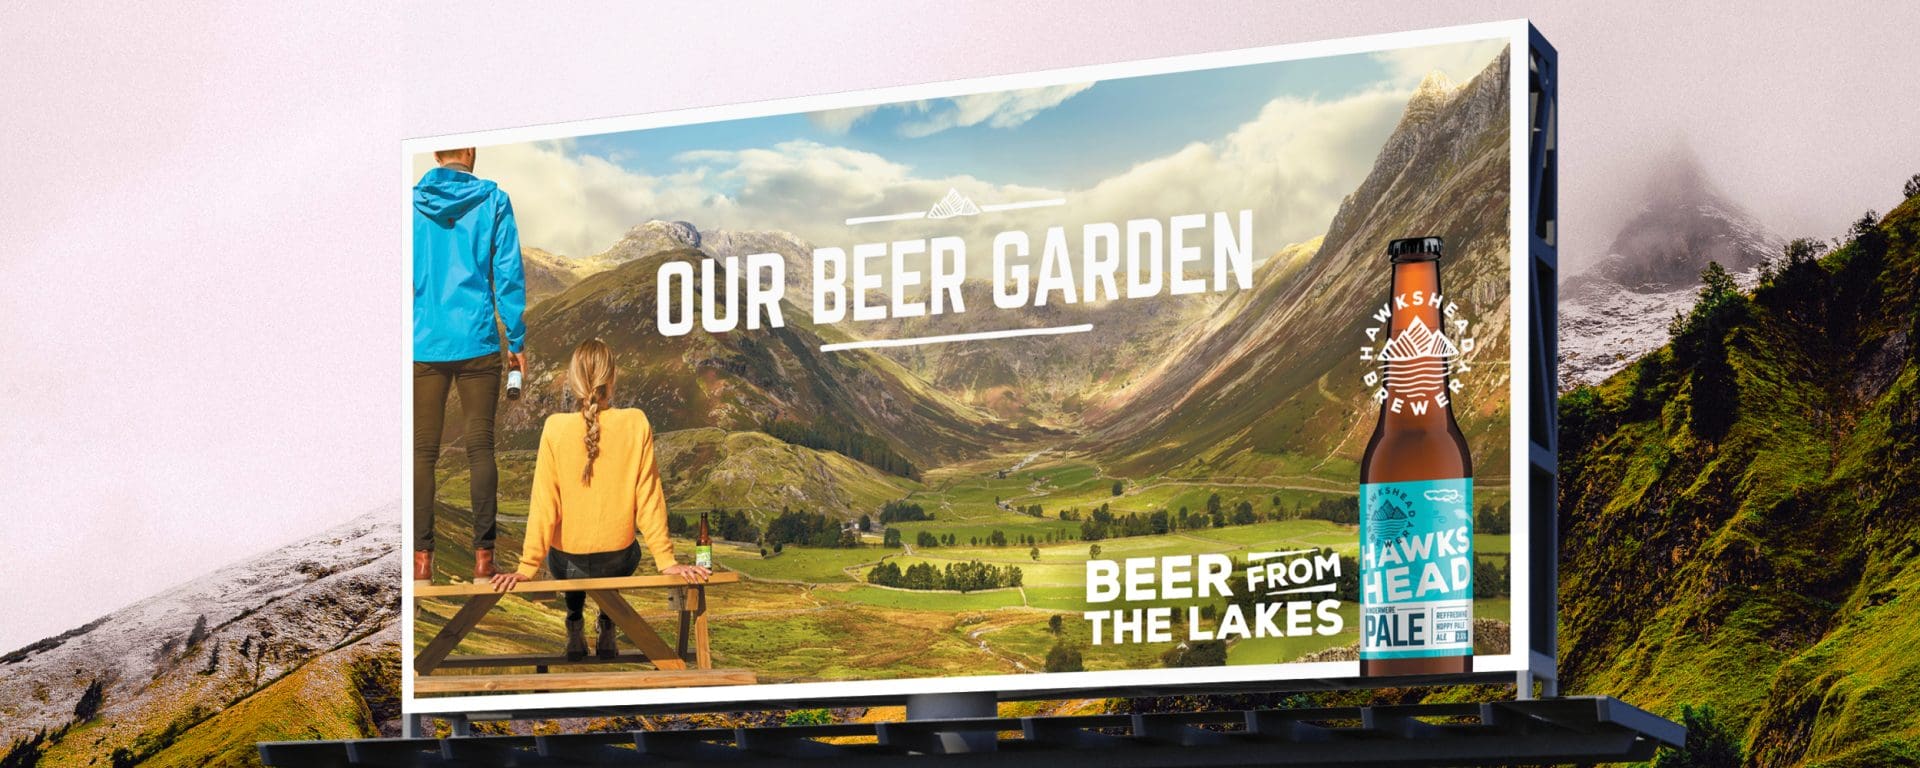 Hawkshead Brewery "Our Beer Garden" 48 Sheet Advert